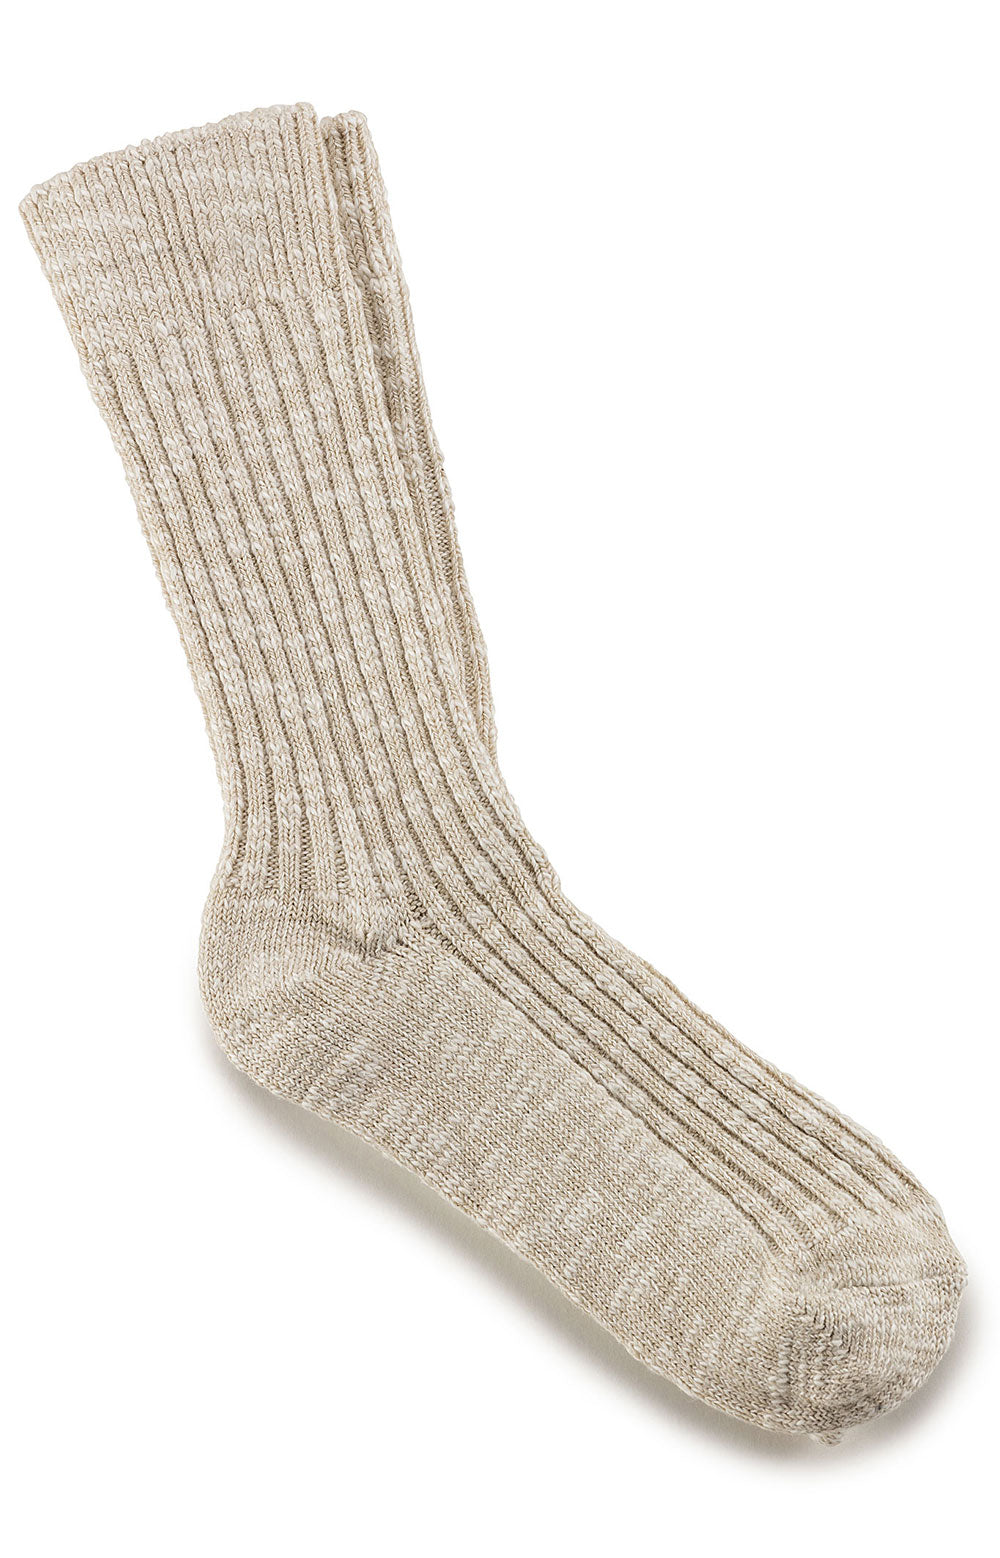 Cotton Slub Socks - Beige White